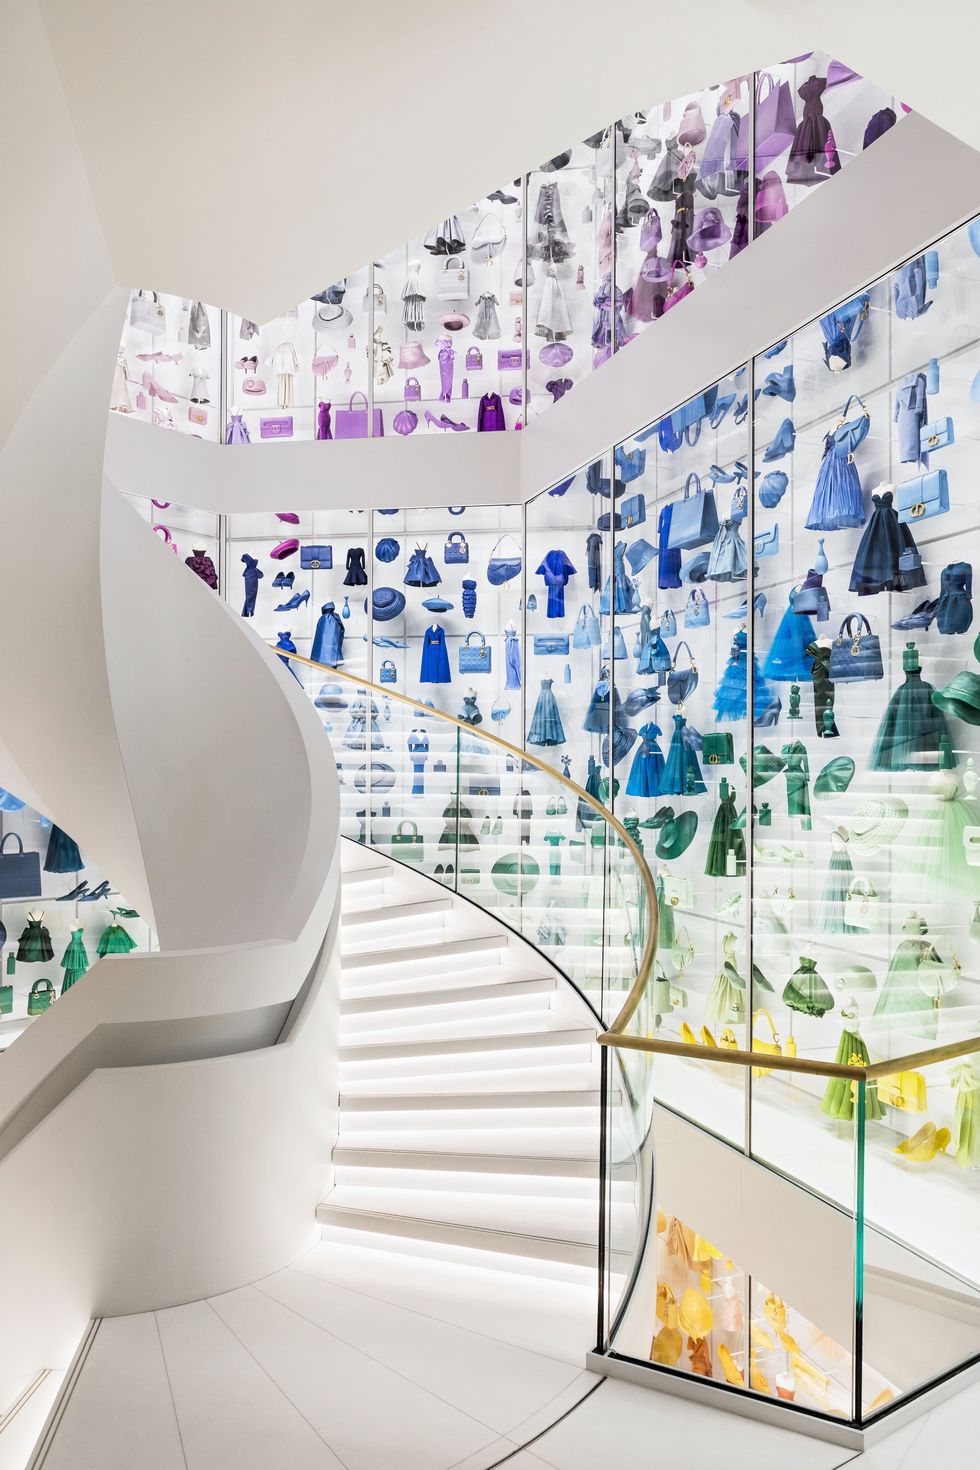 Peter Marino renovates Louis Vuitton's London store with